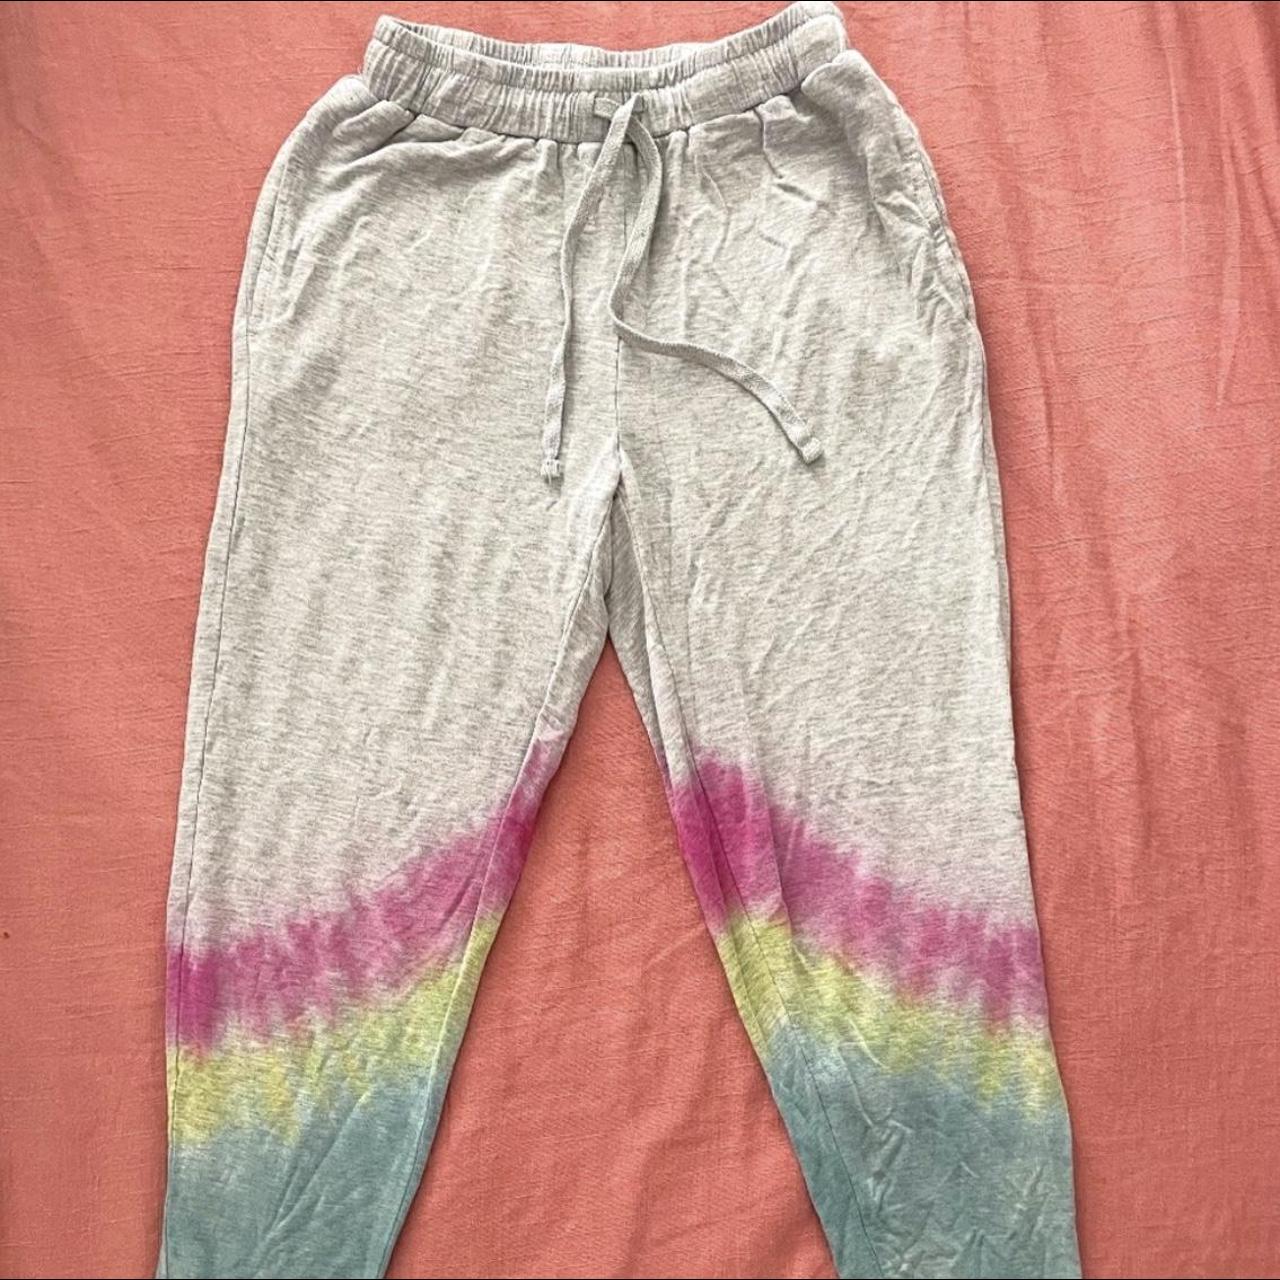 Colsie grey sweatpants with tie dye bottom - Depop